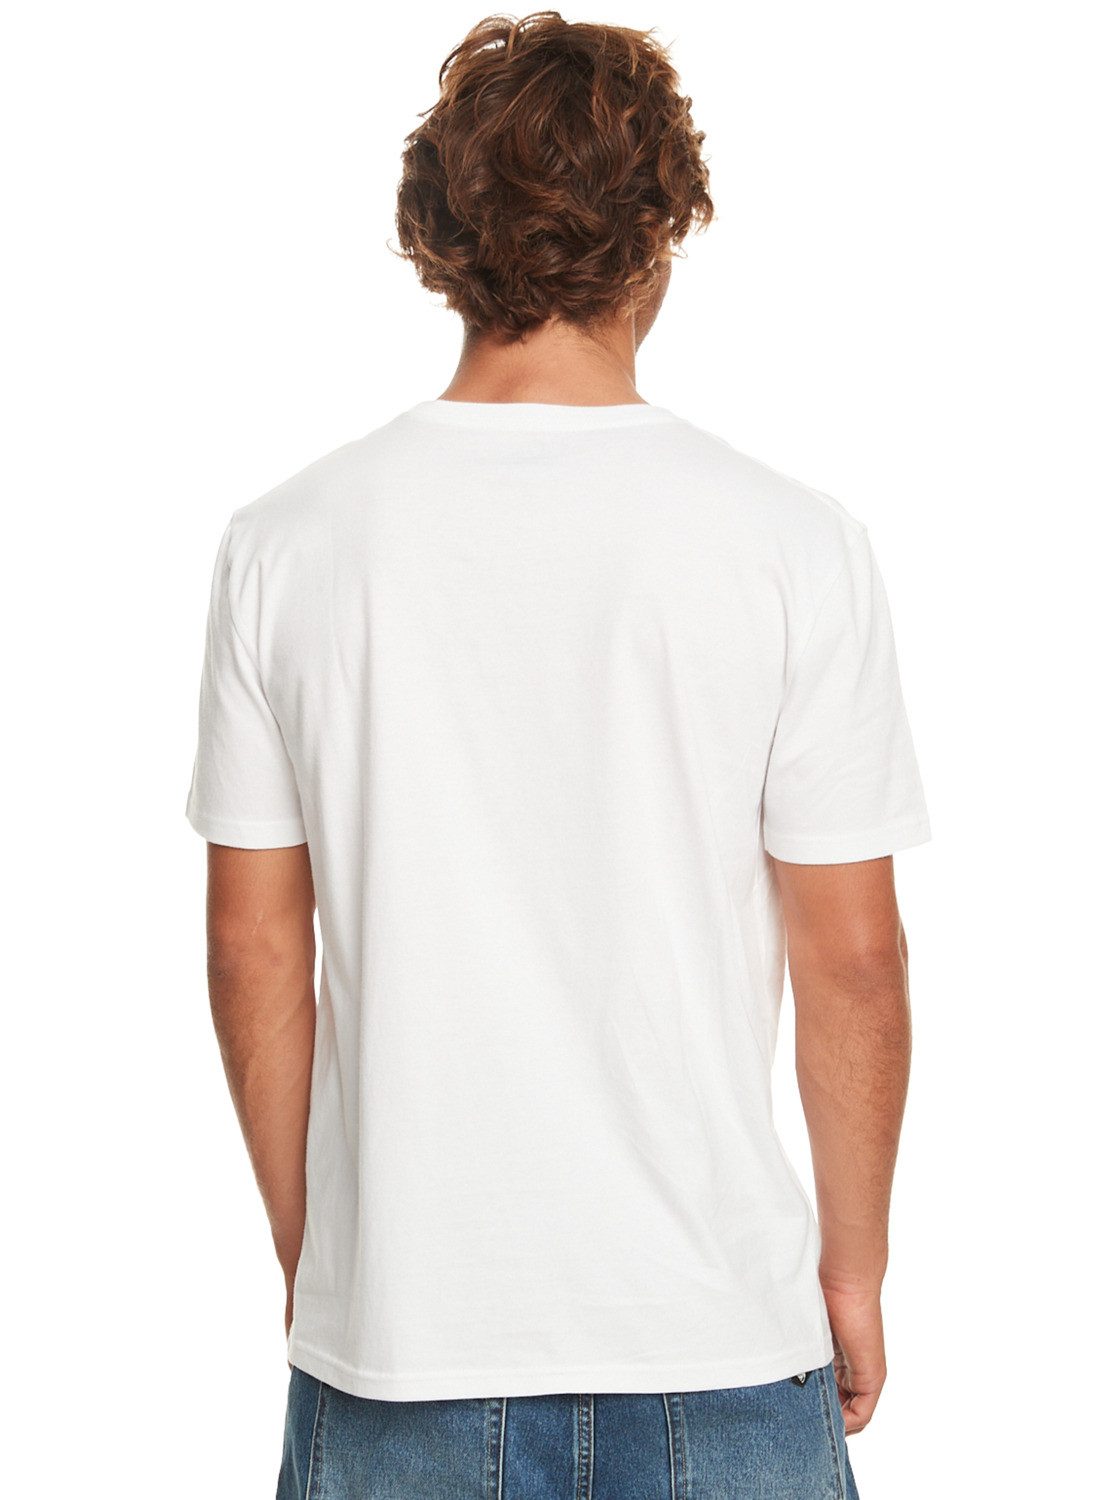 Trim Circle T-Shirt Quiksilver White